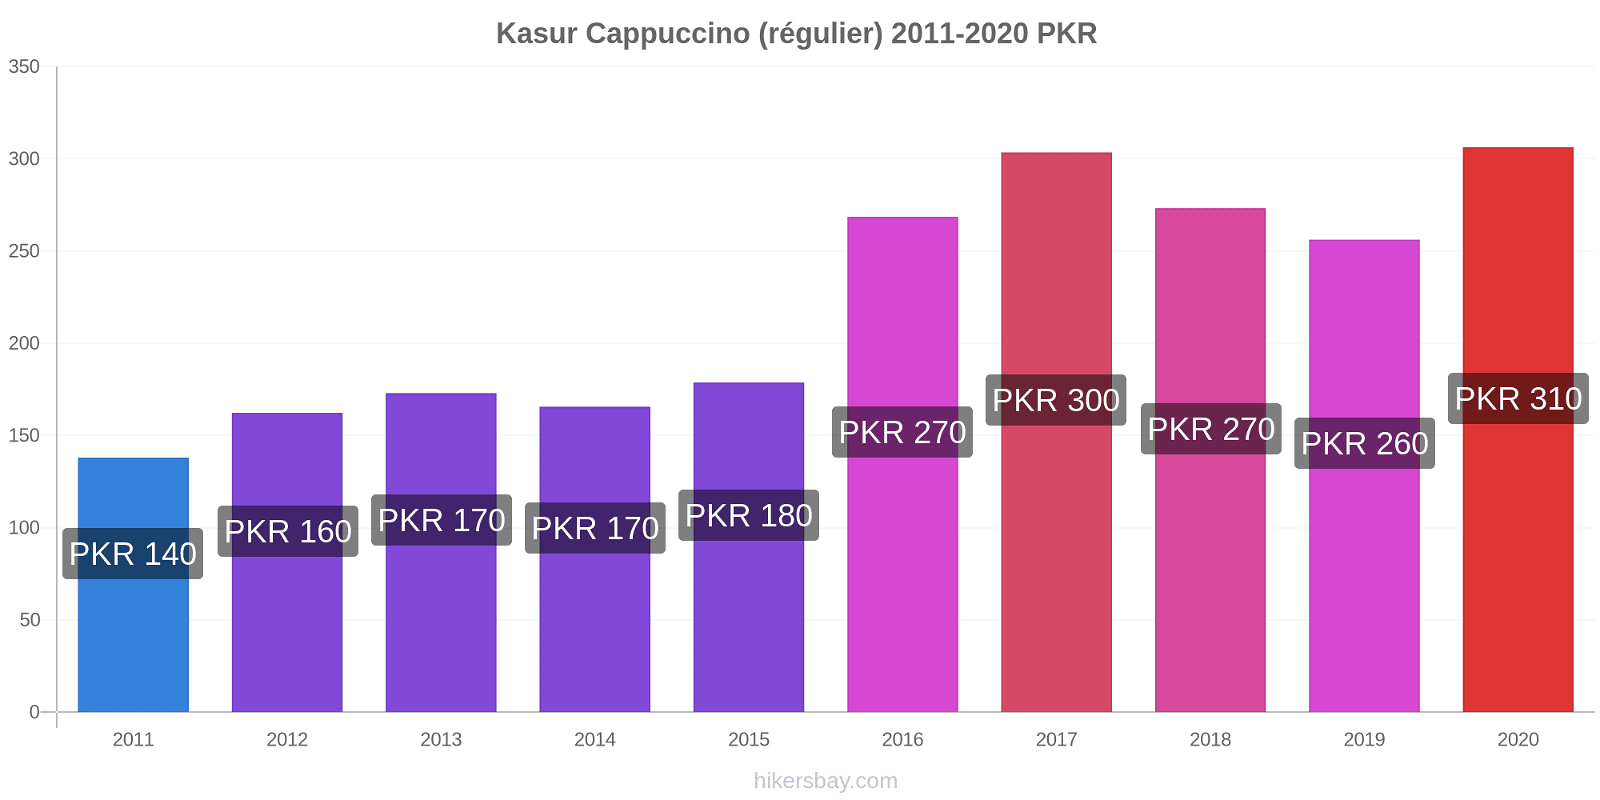 Kasur changements de prix Cappuccino (régulier) hikersbay.com